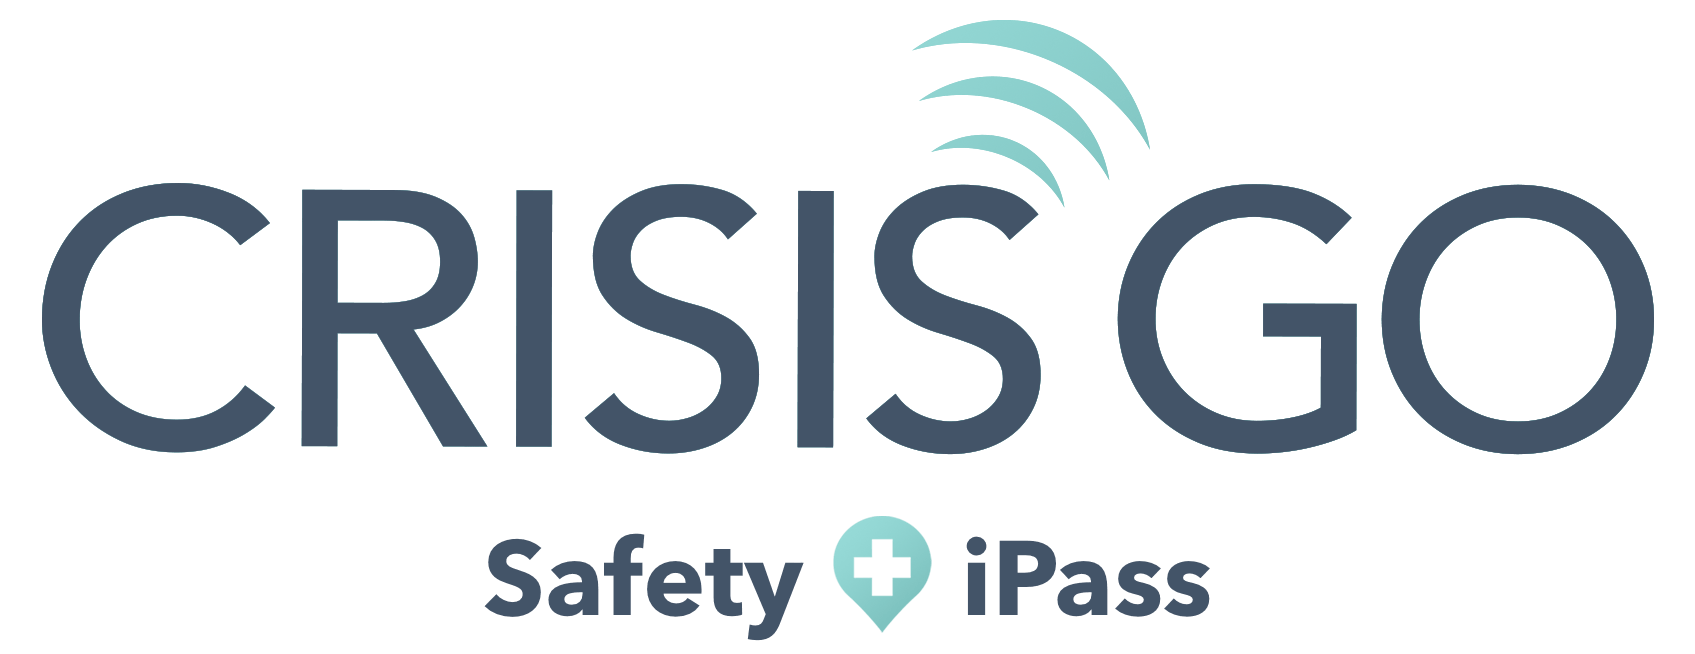 CrisisGo Safety iPass